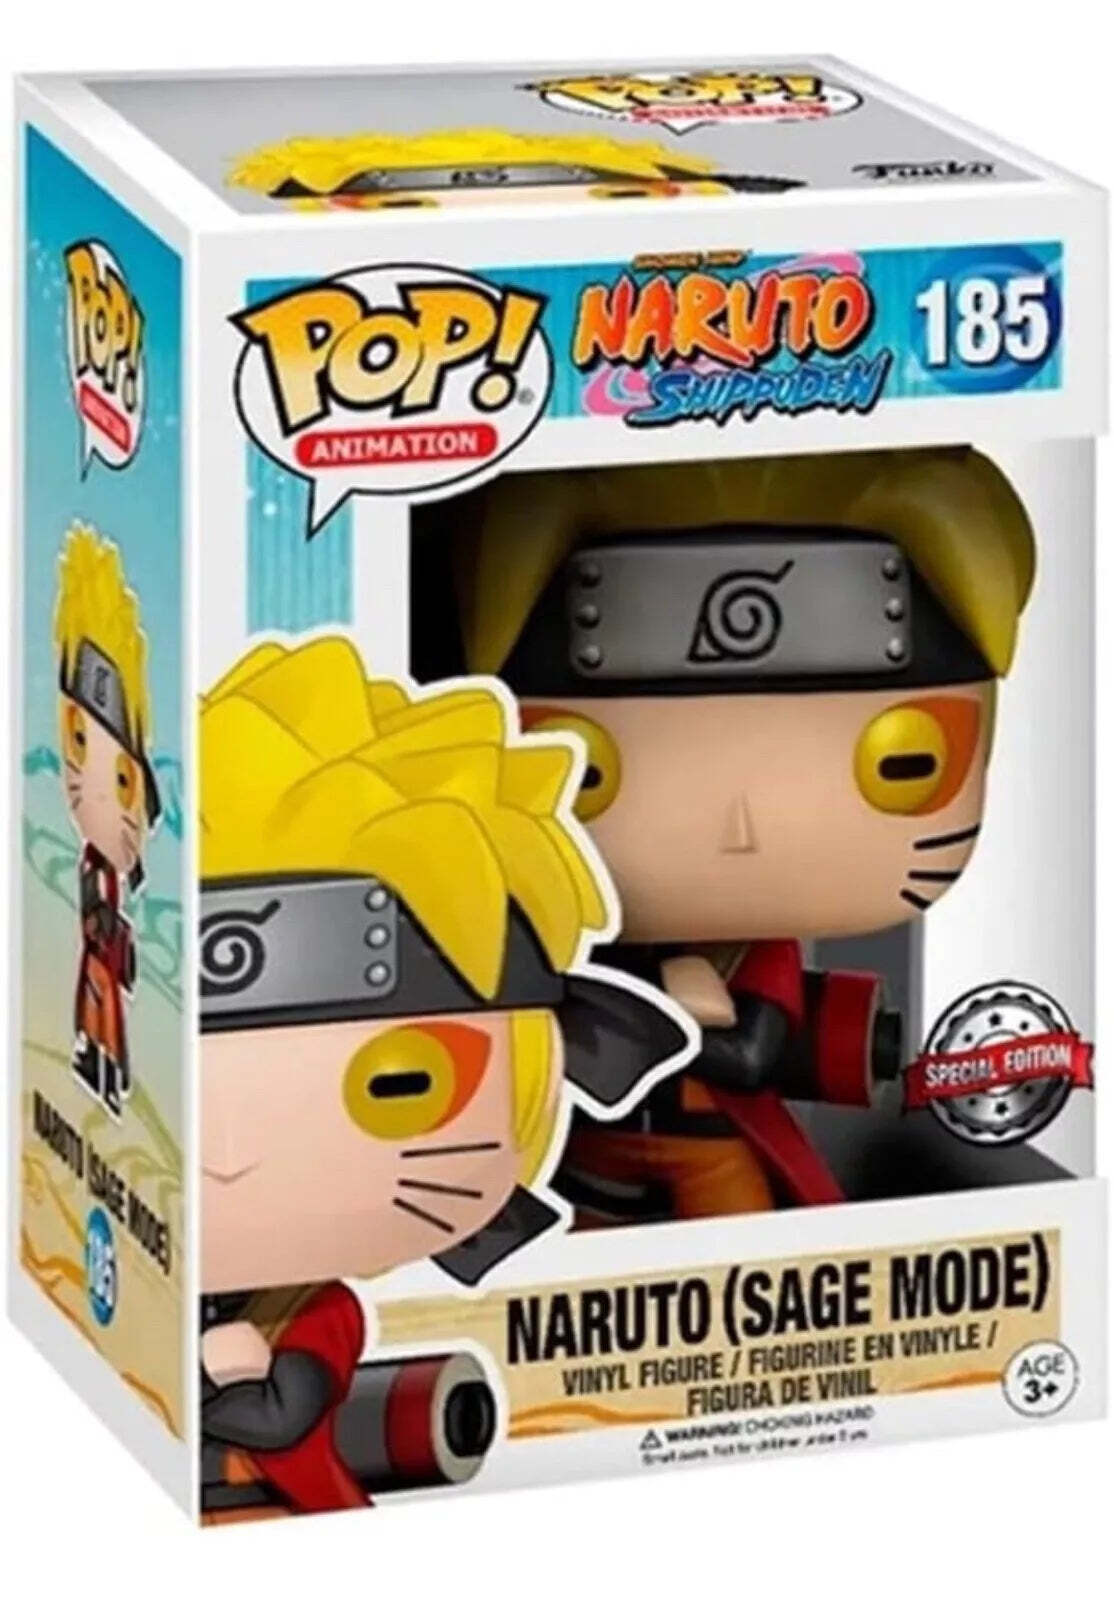 Funko Pop Naruto Shippuden Vinyl Figure - Naruto (Sage Mode) 185 Special Edition